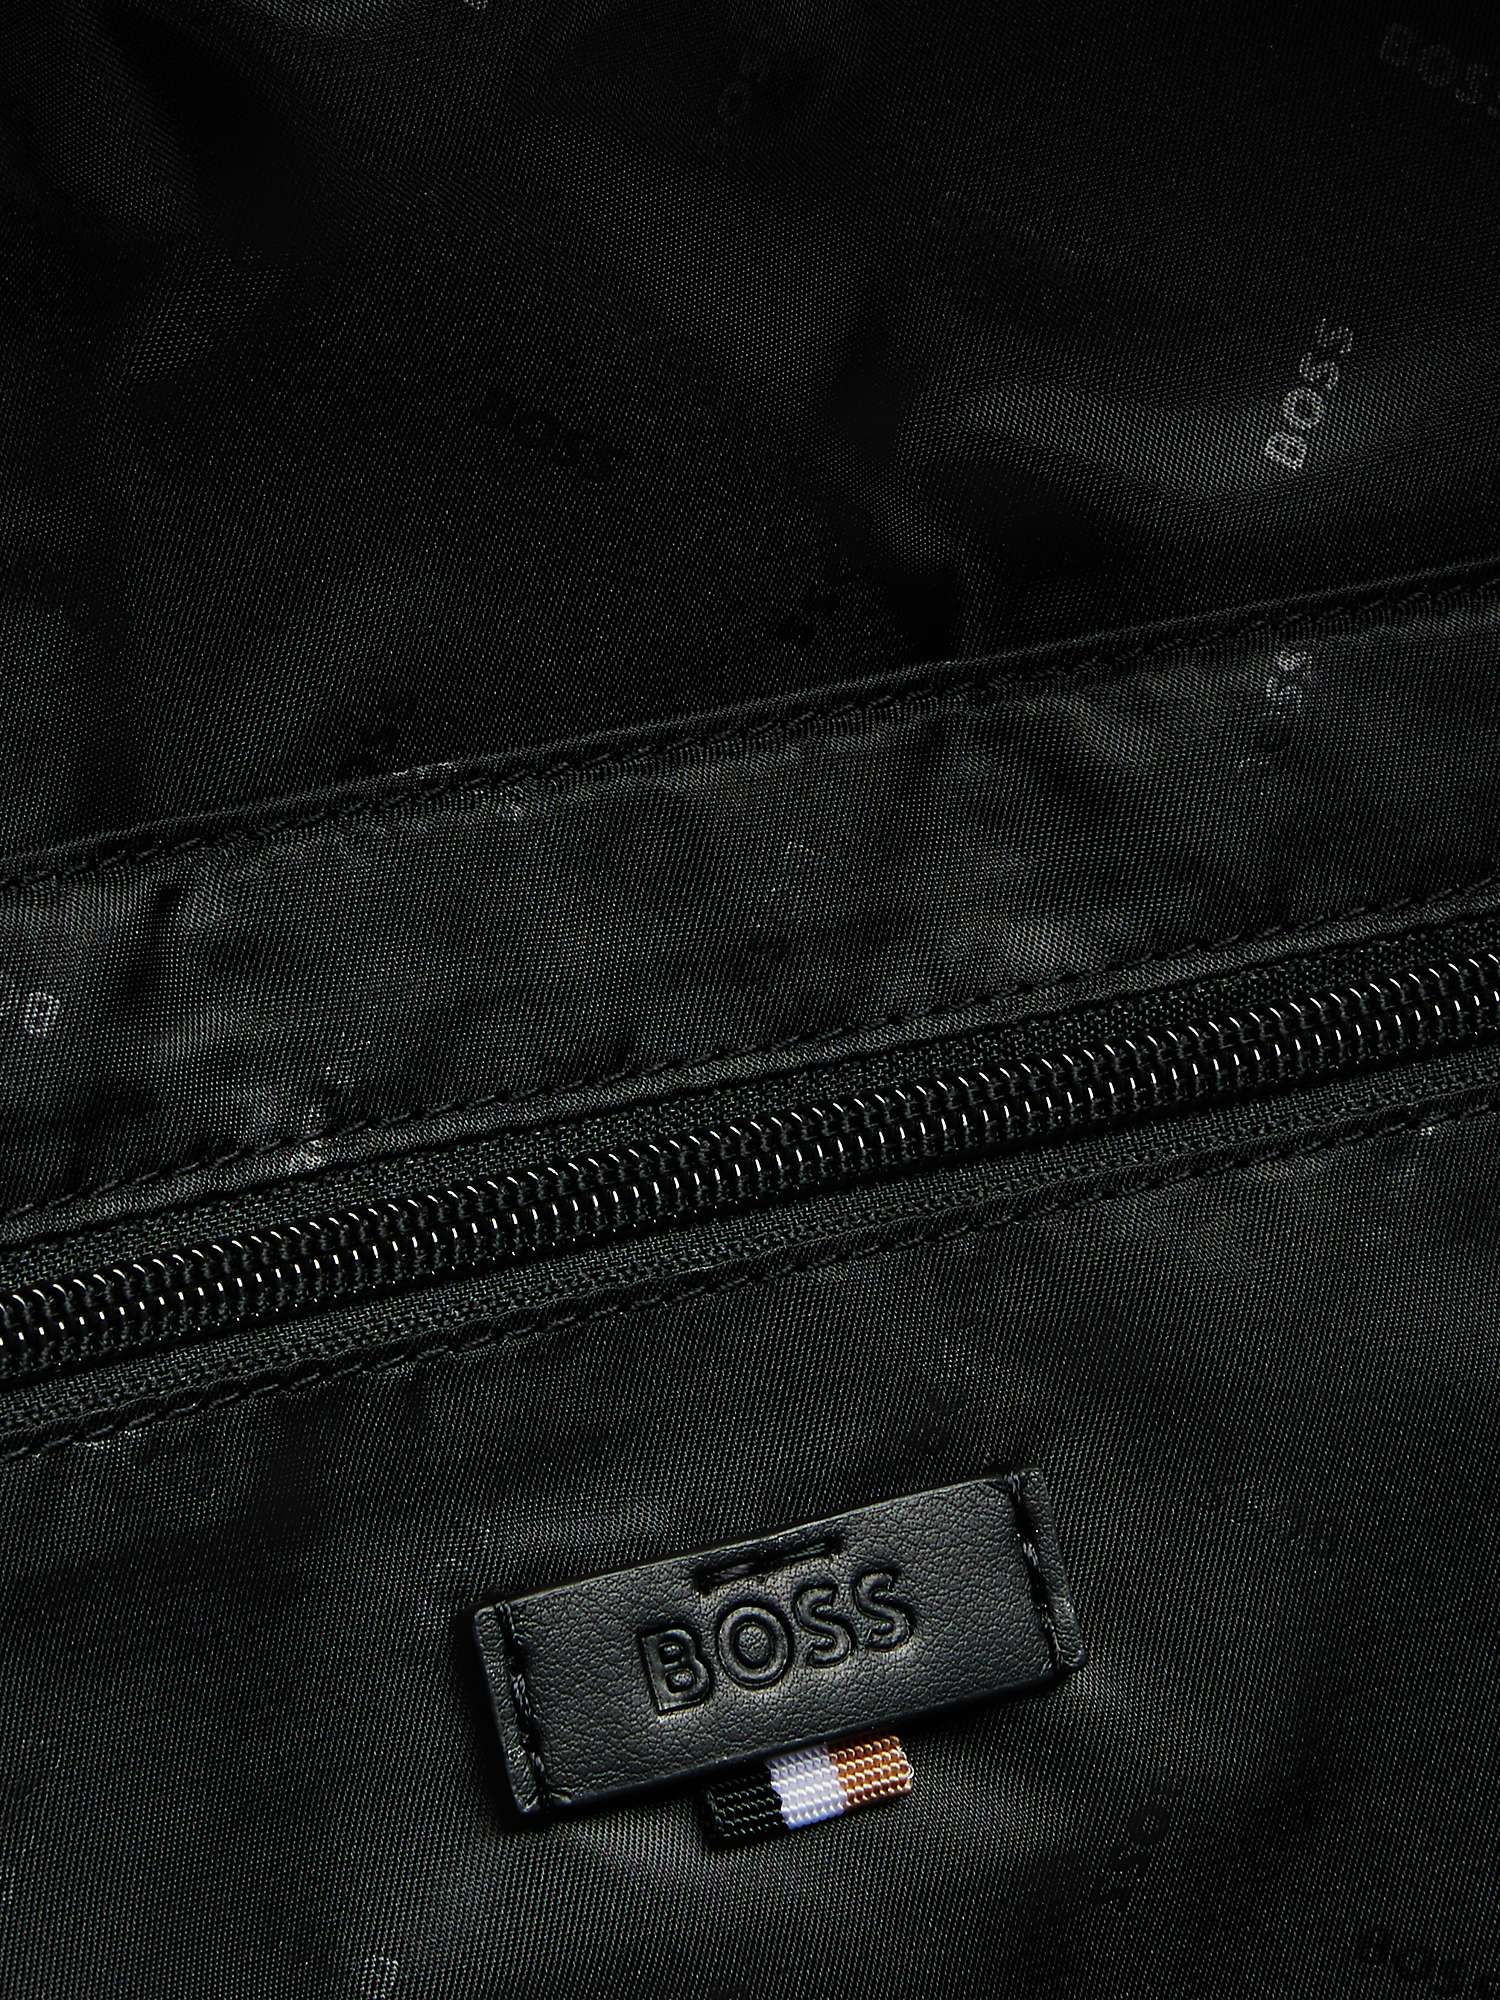 Buy BOSS Ray Backpack, Black Online at johnlewis.com